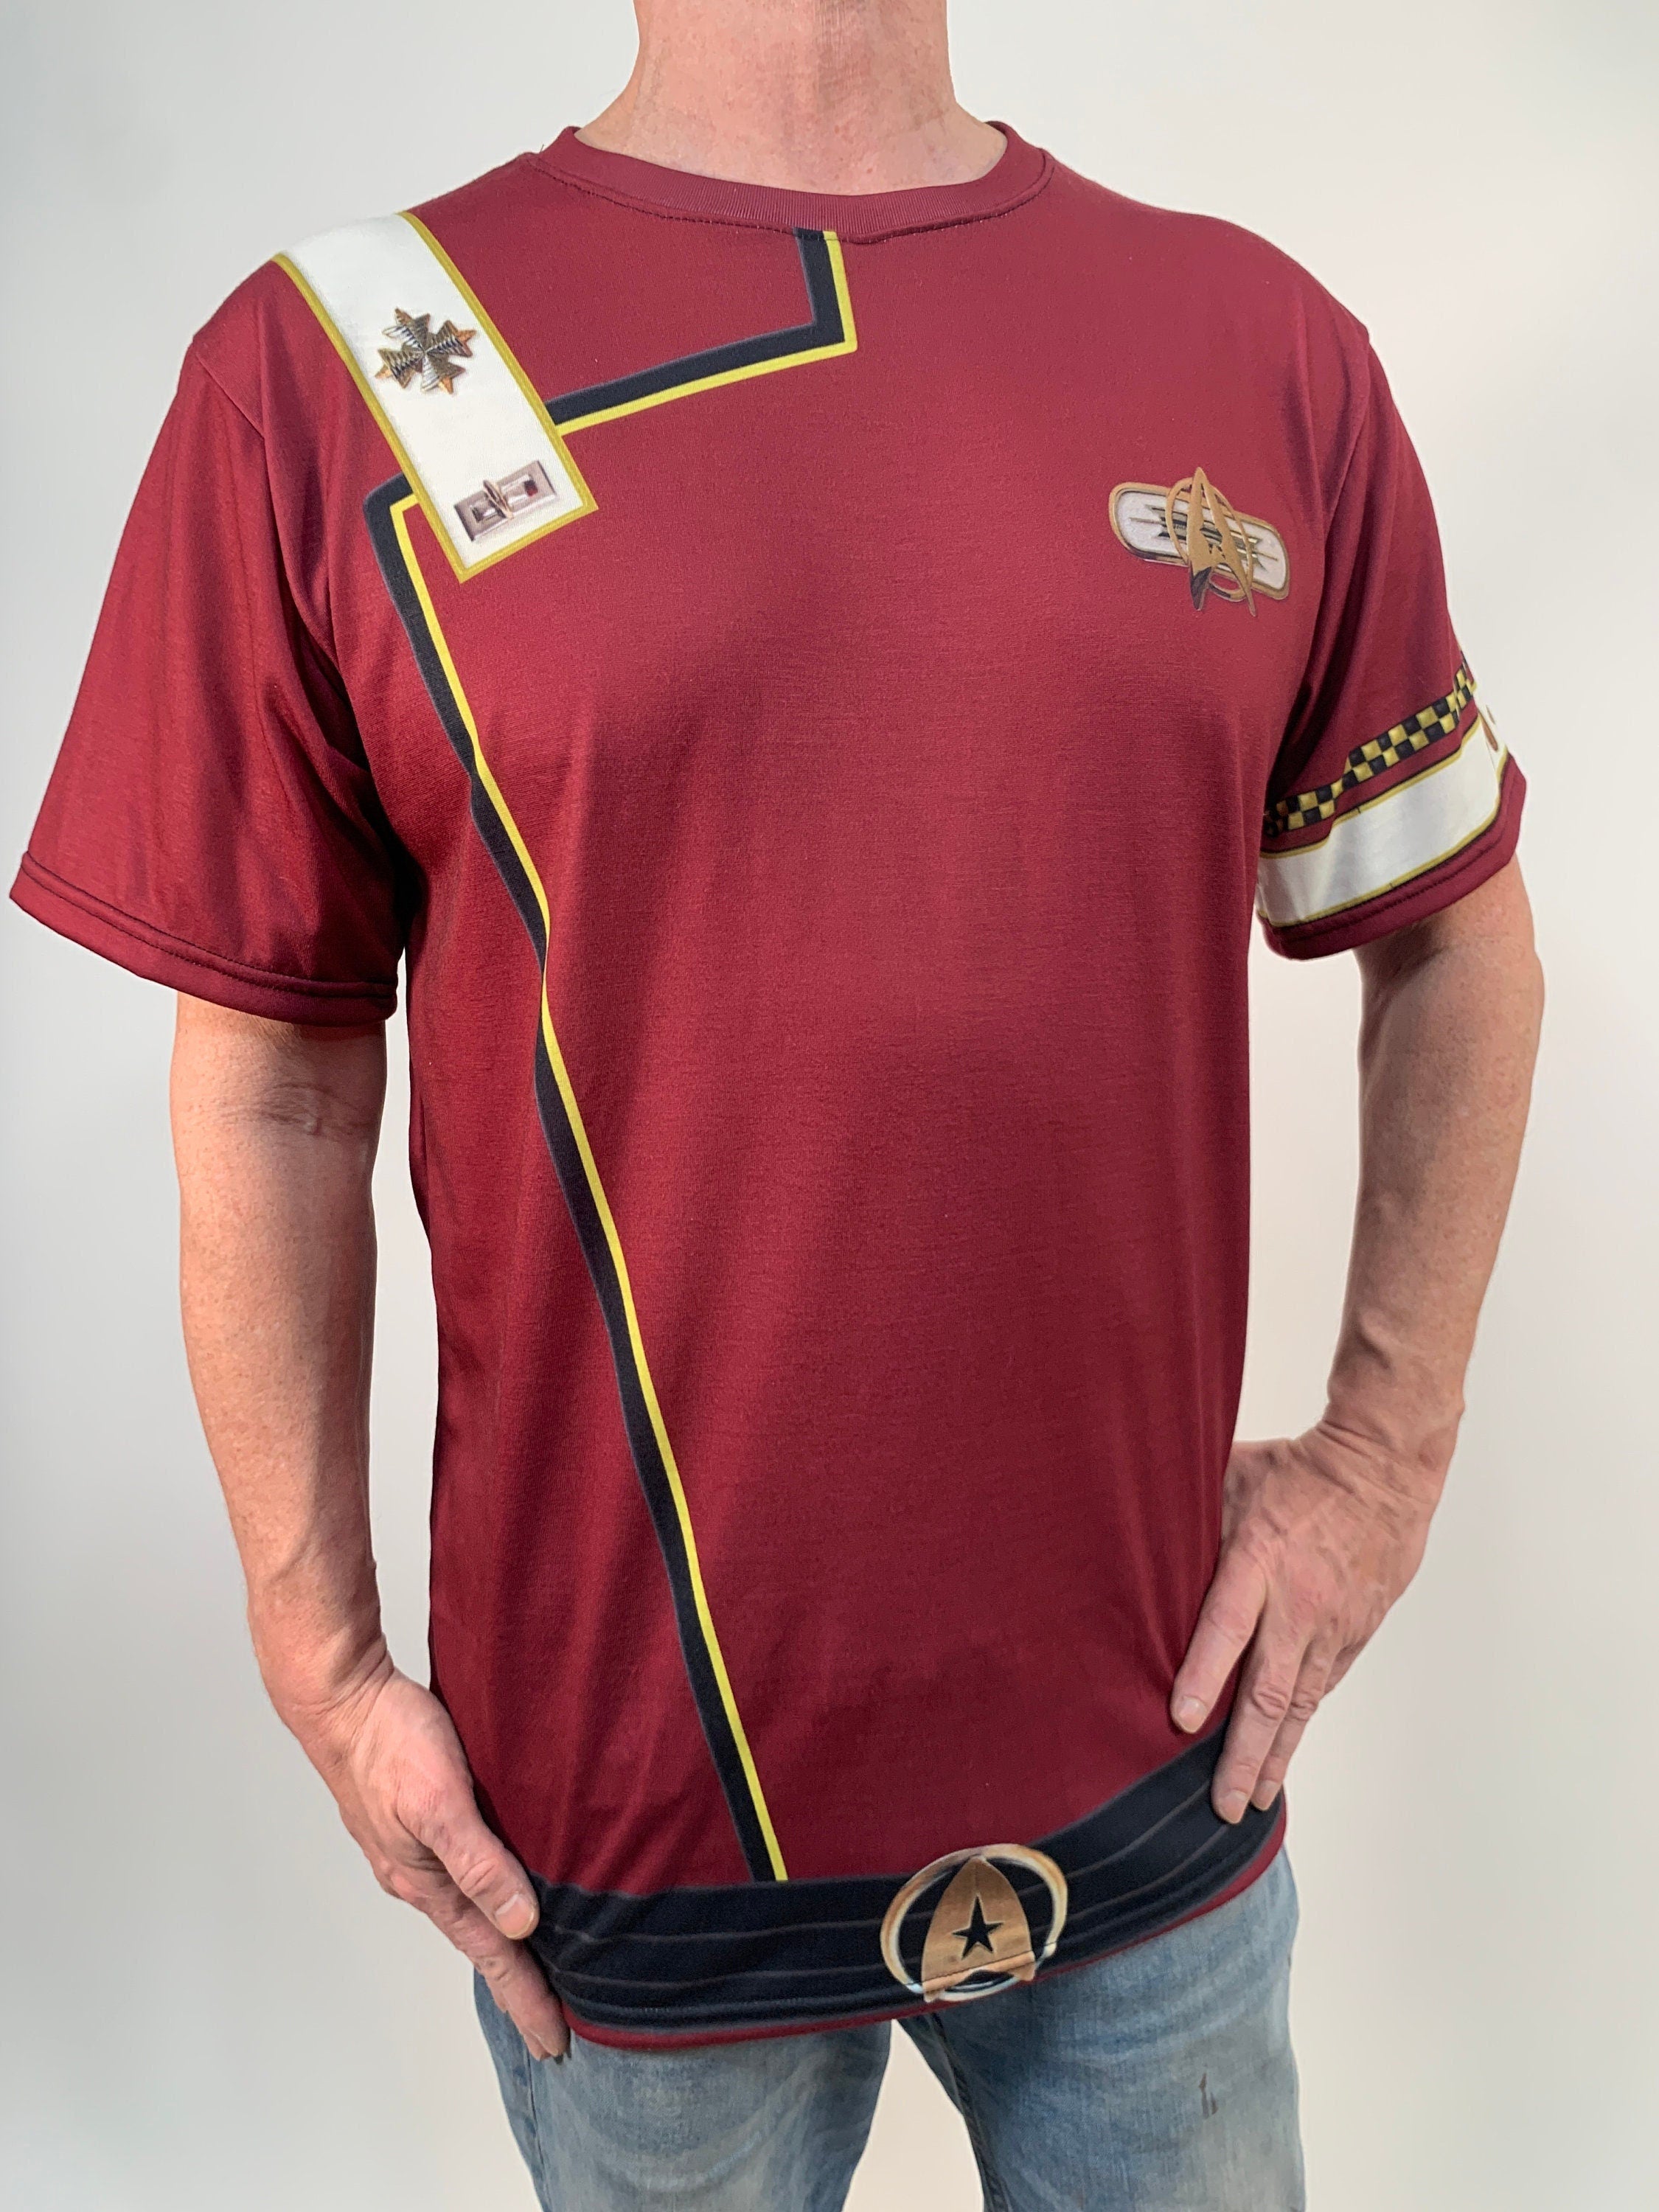 TWOK Admiral Kirk Uniform Style T-Shirt Monster Maroon